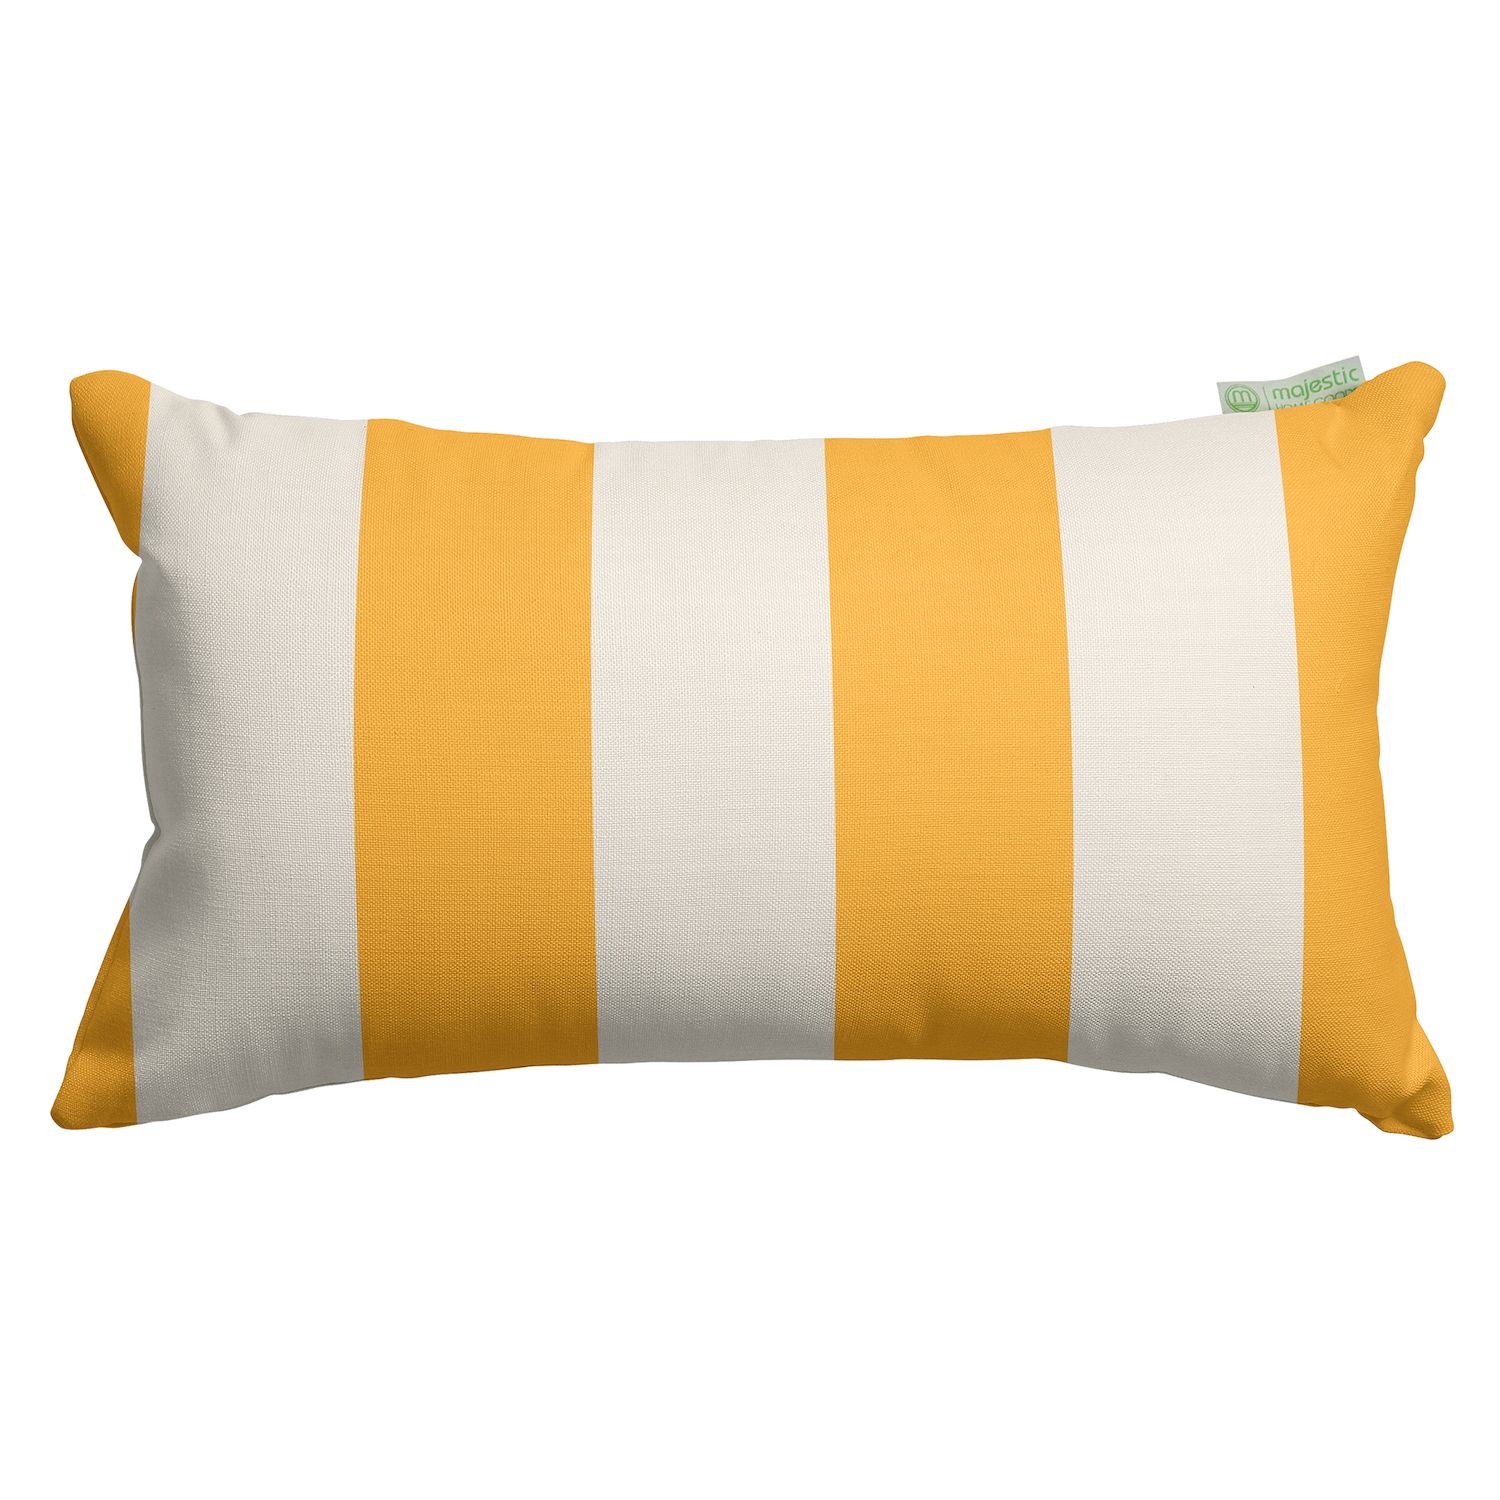 small yellow pillows